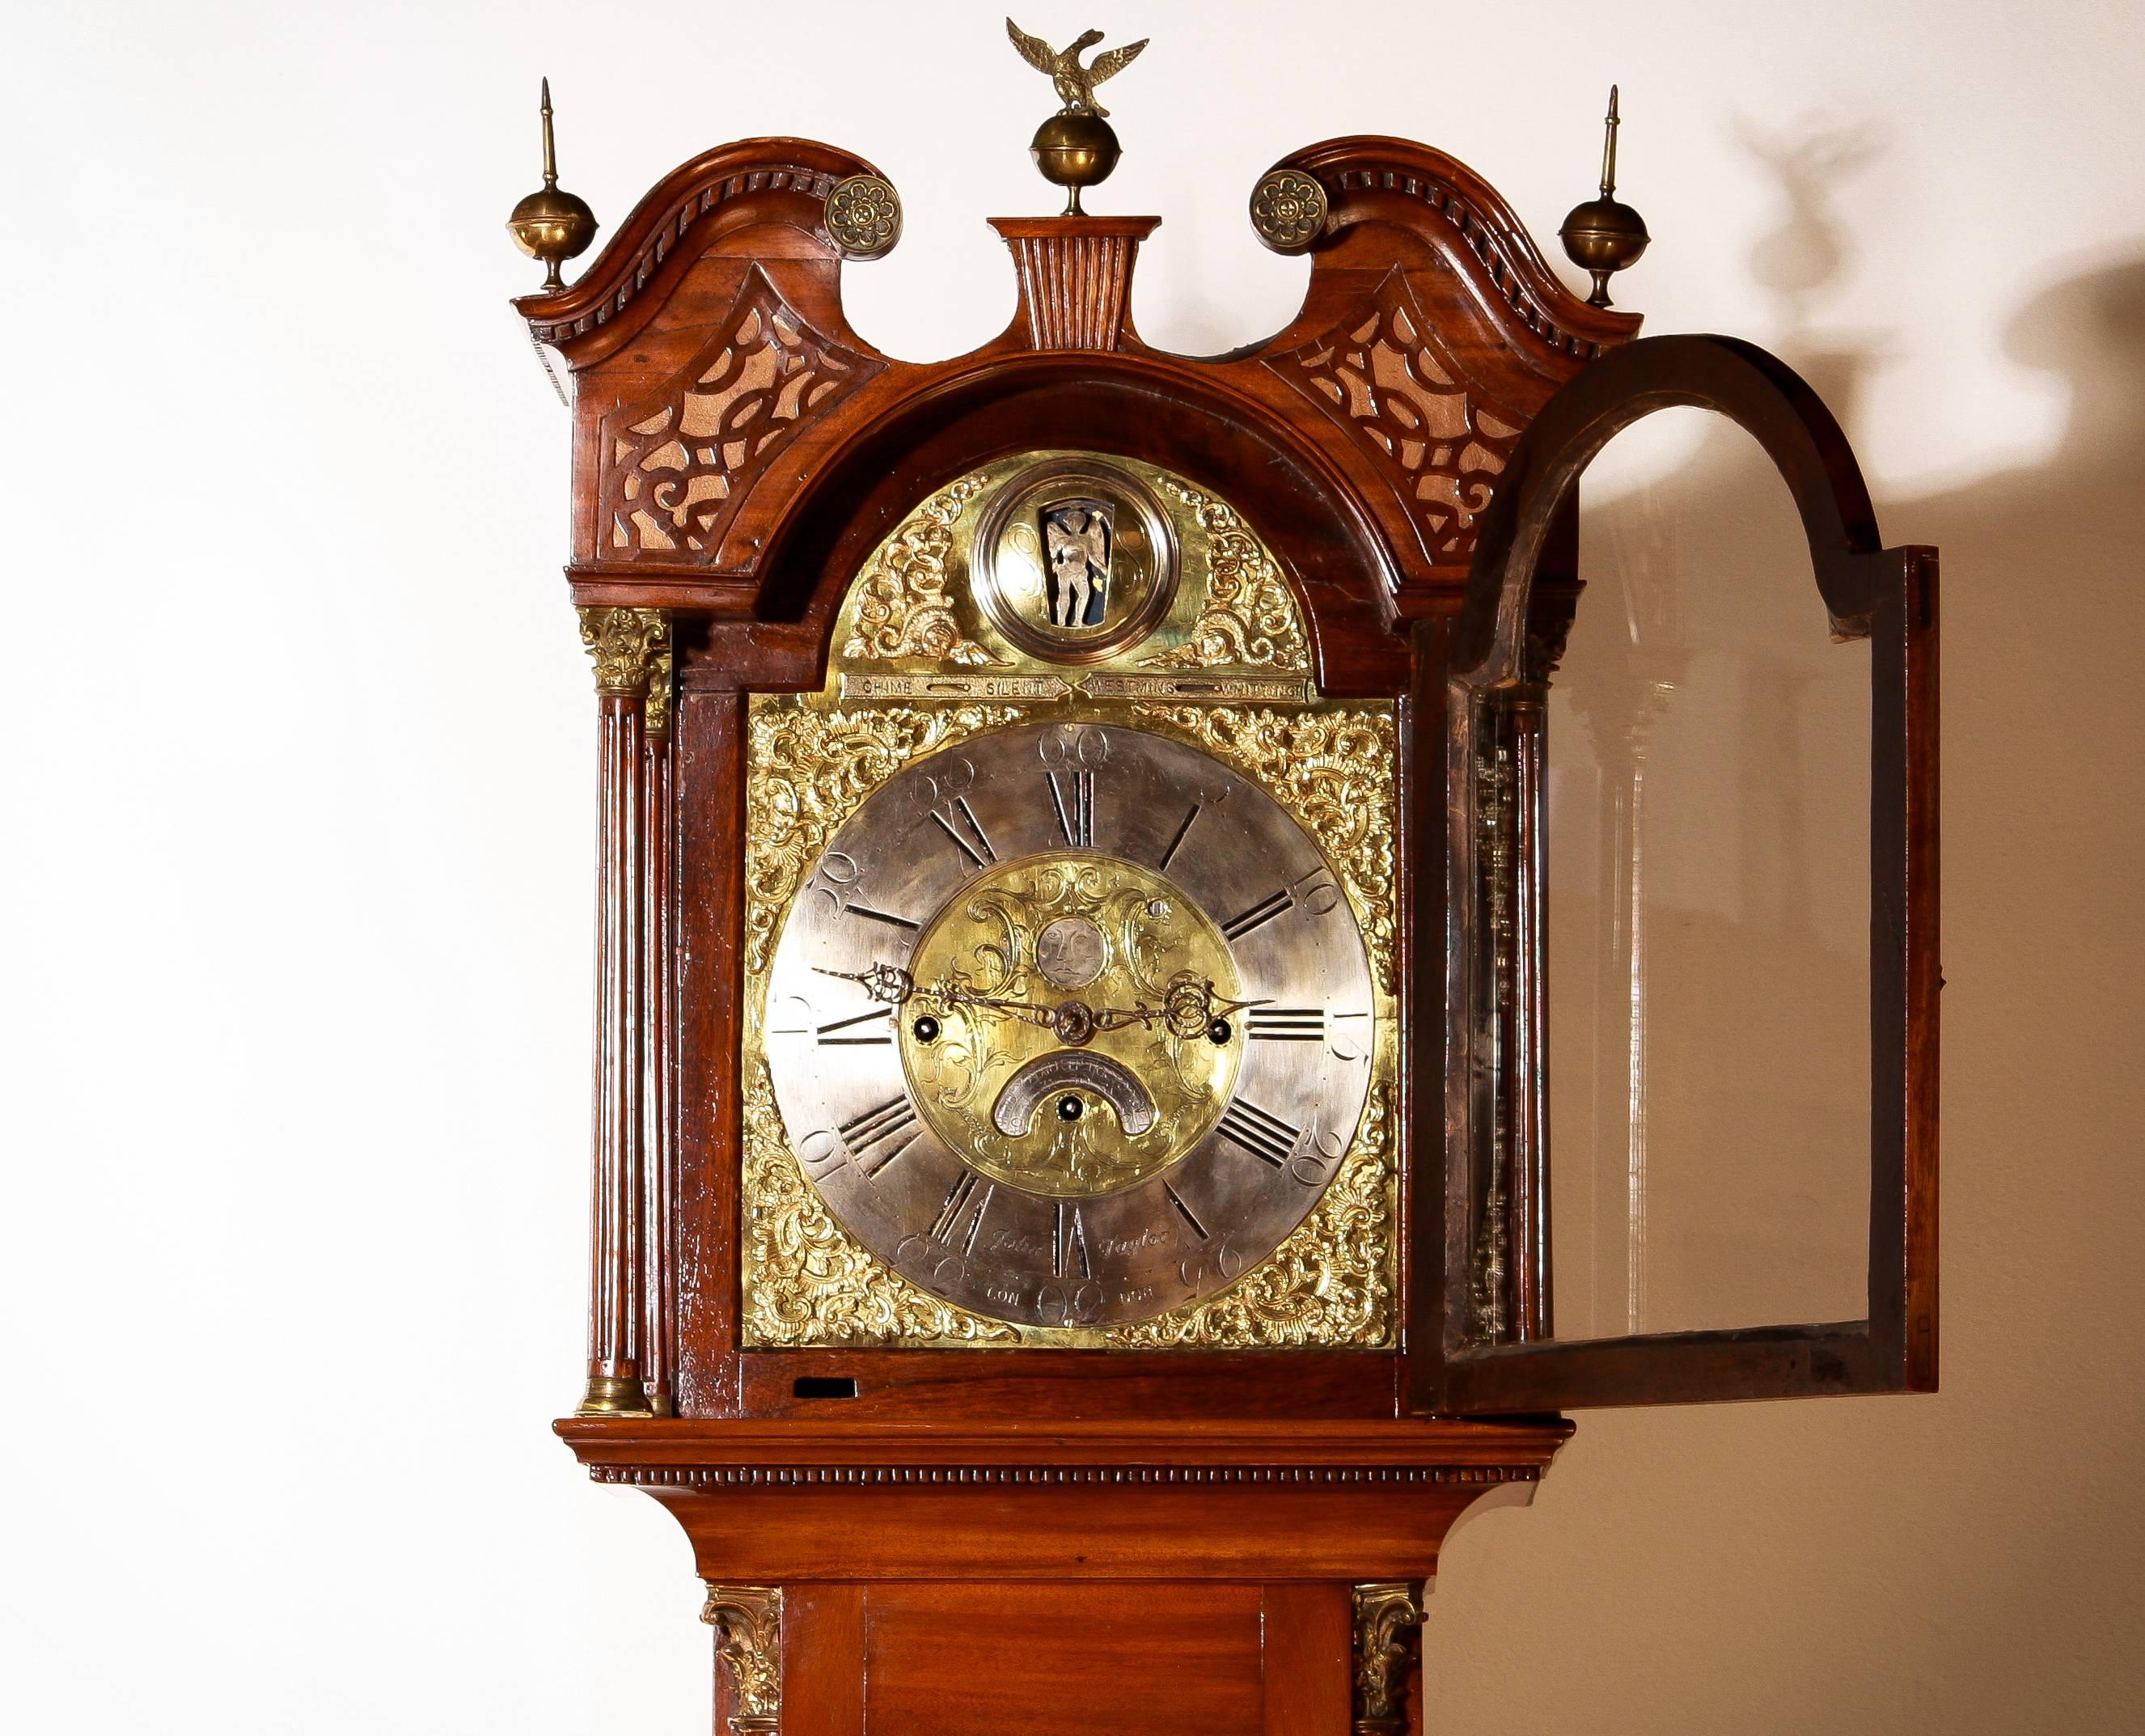 18th century grandfather clock